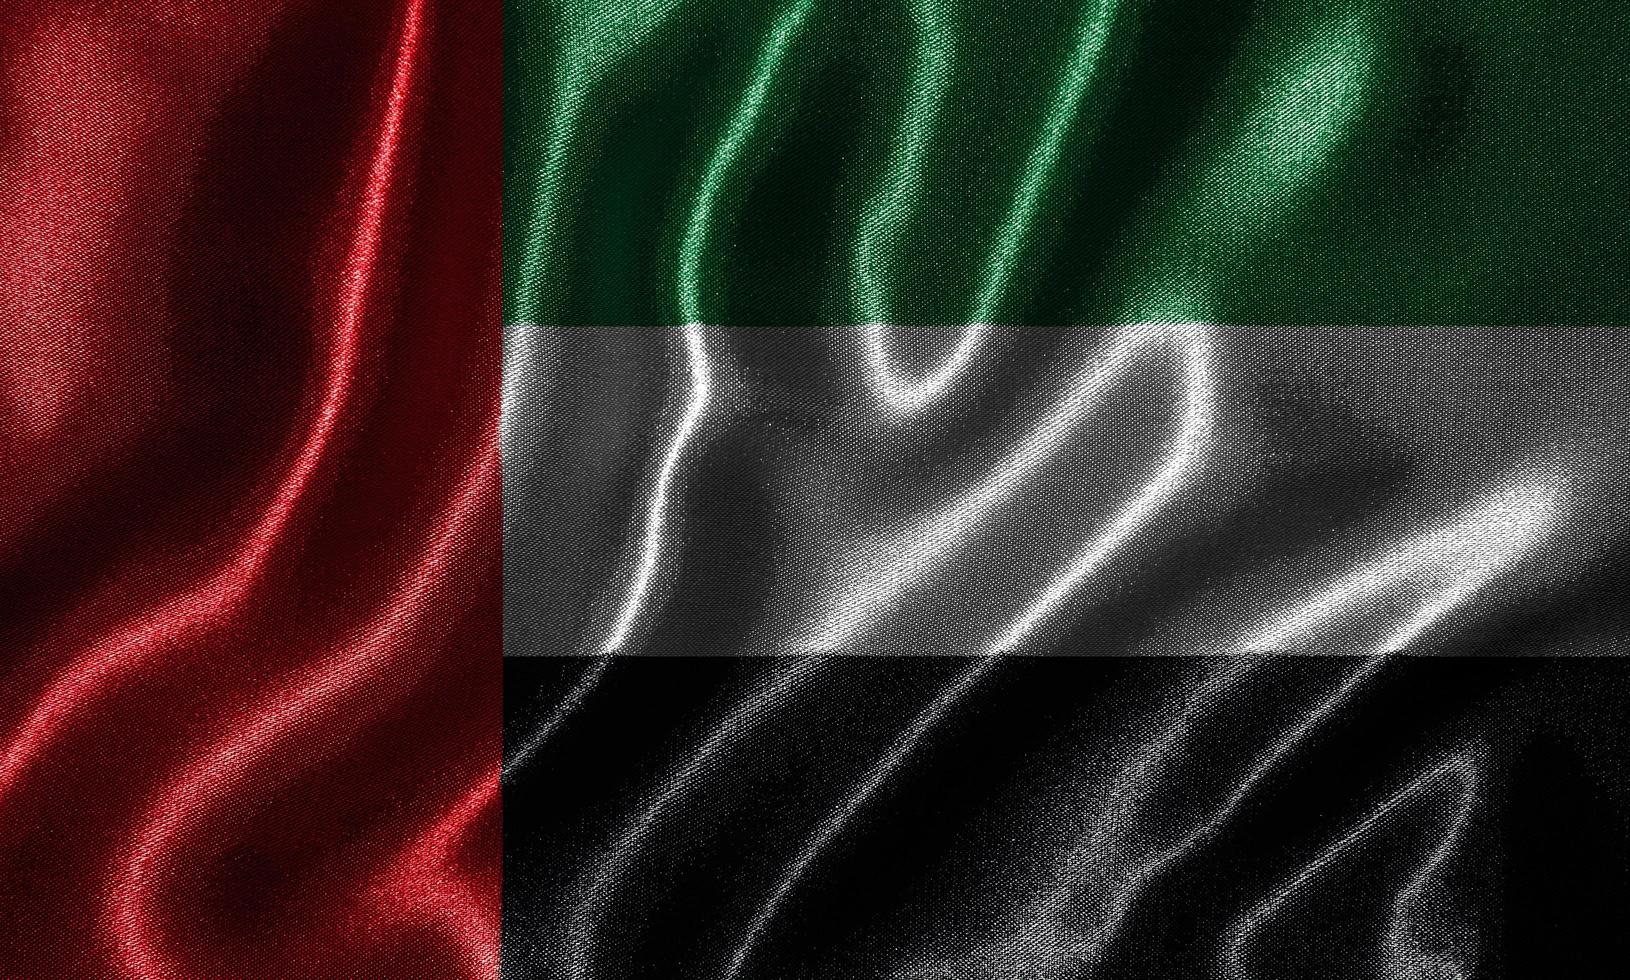 papel de parede por bandeira dos emirados árabes e bandeira por tecido. foto